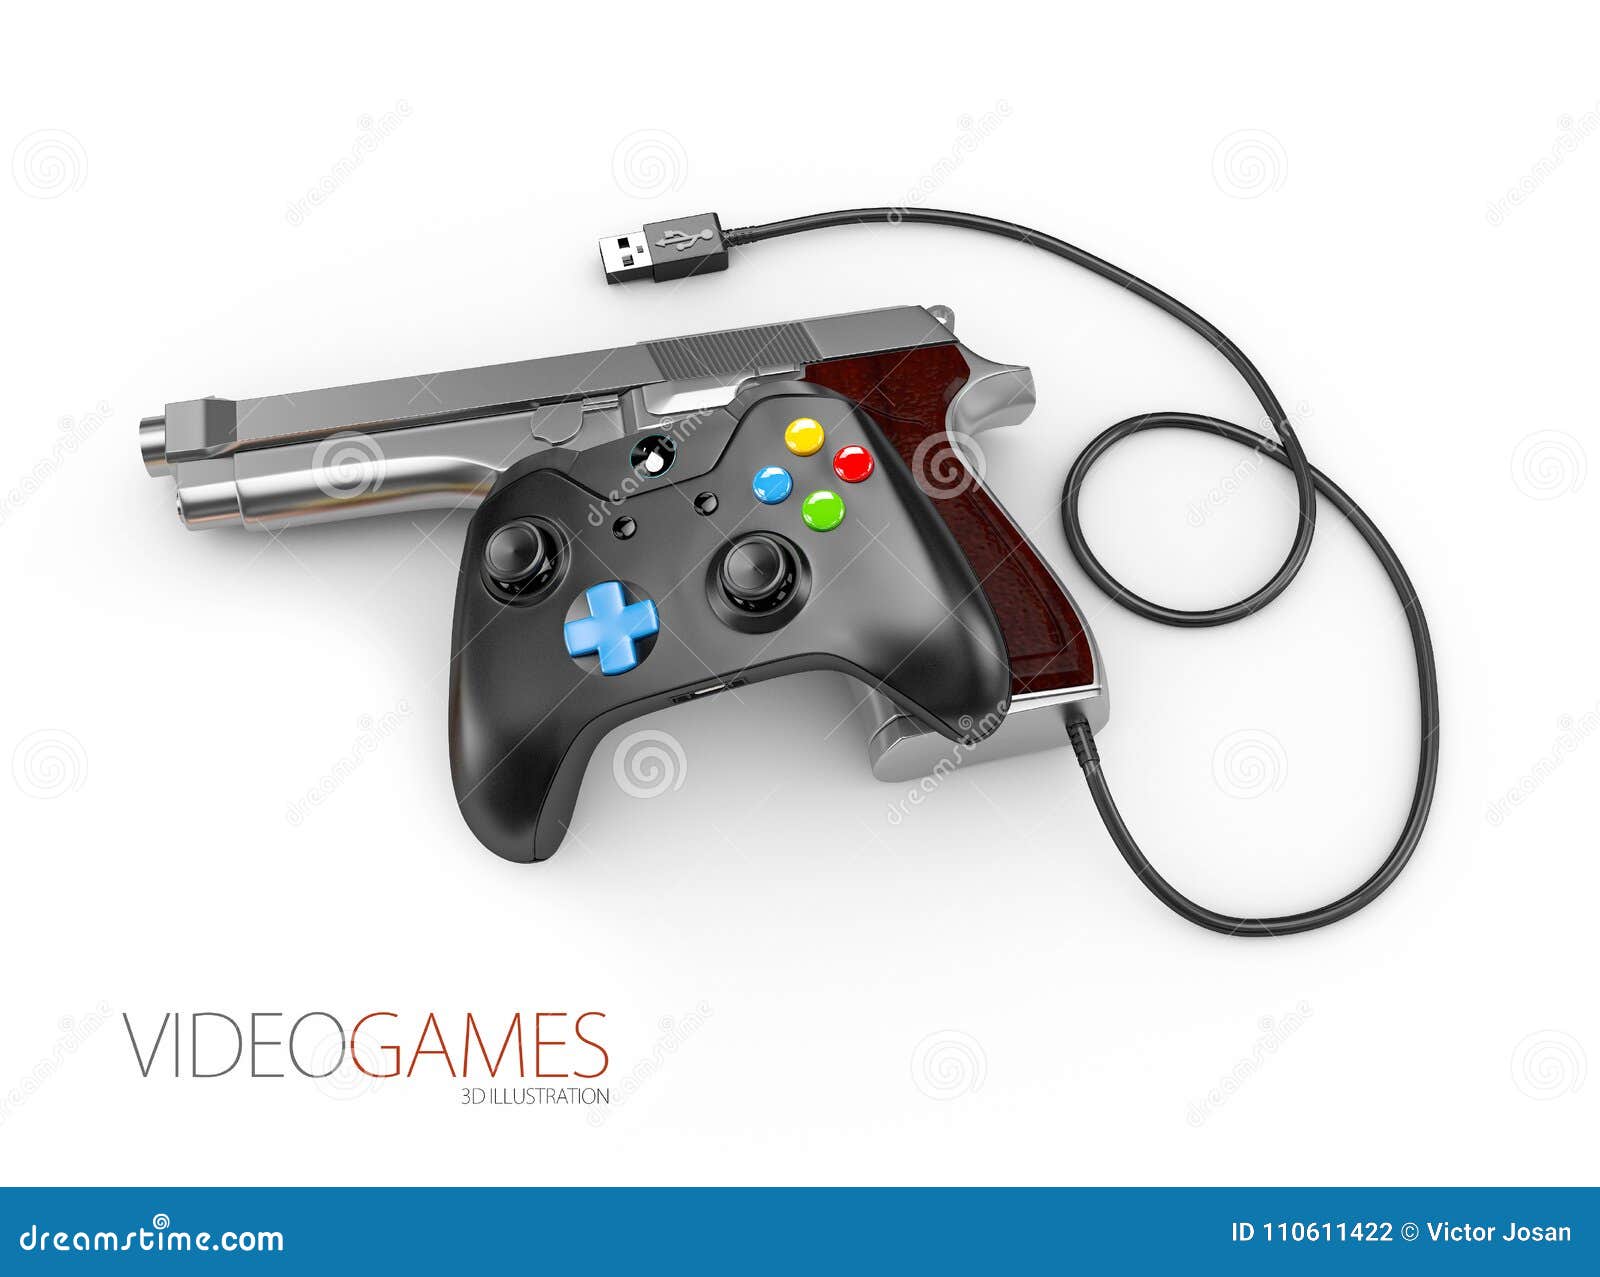 video game with gun controller